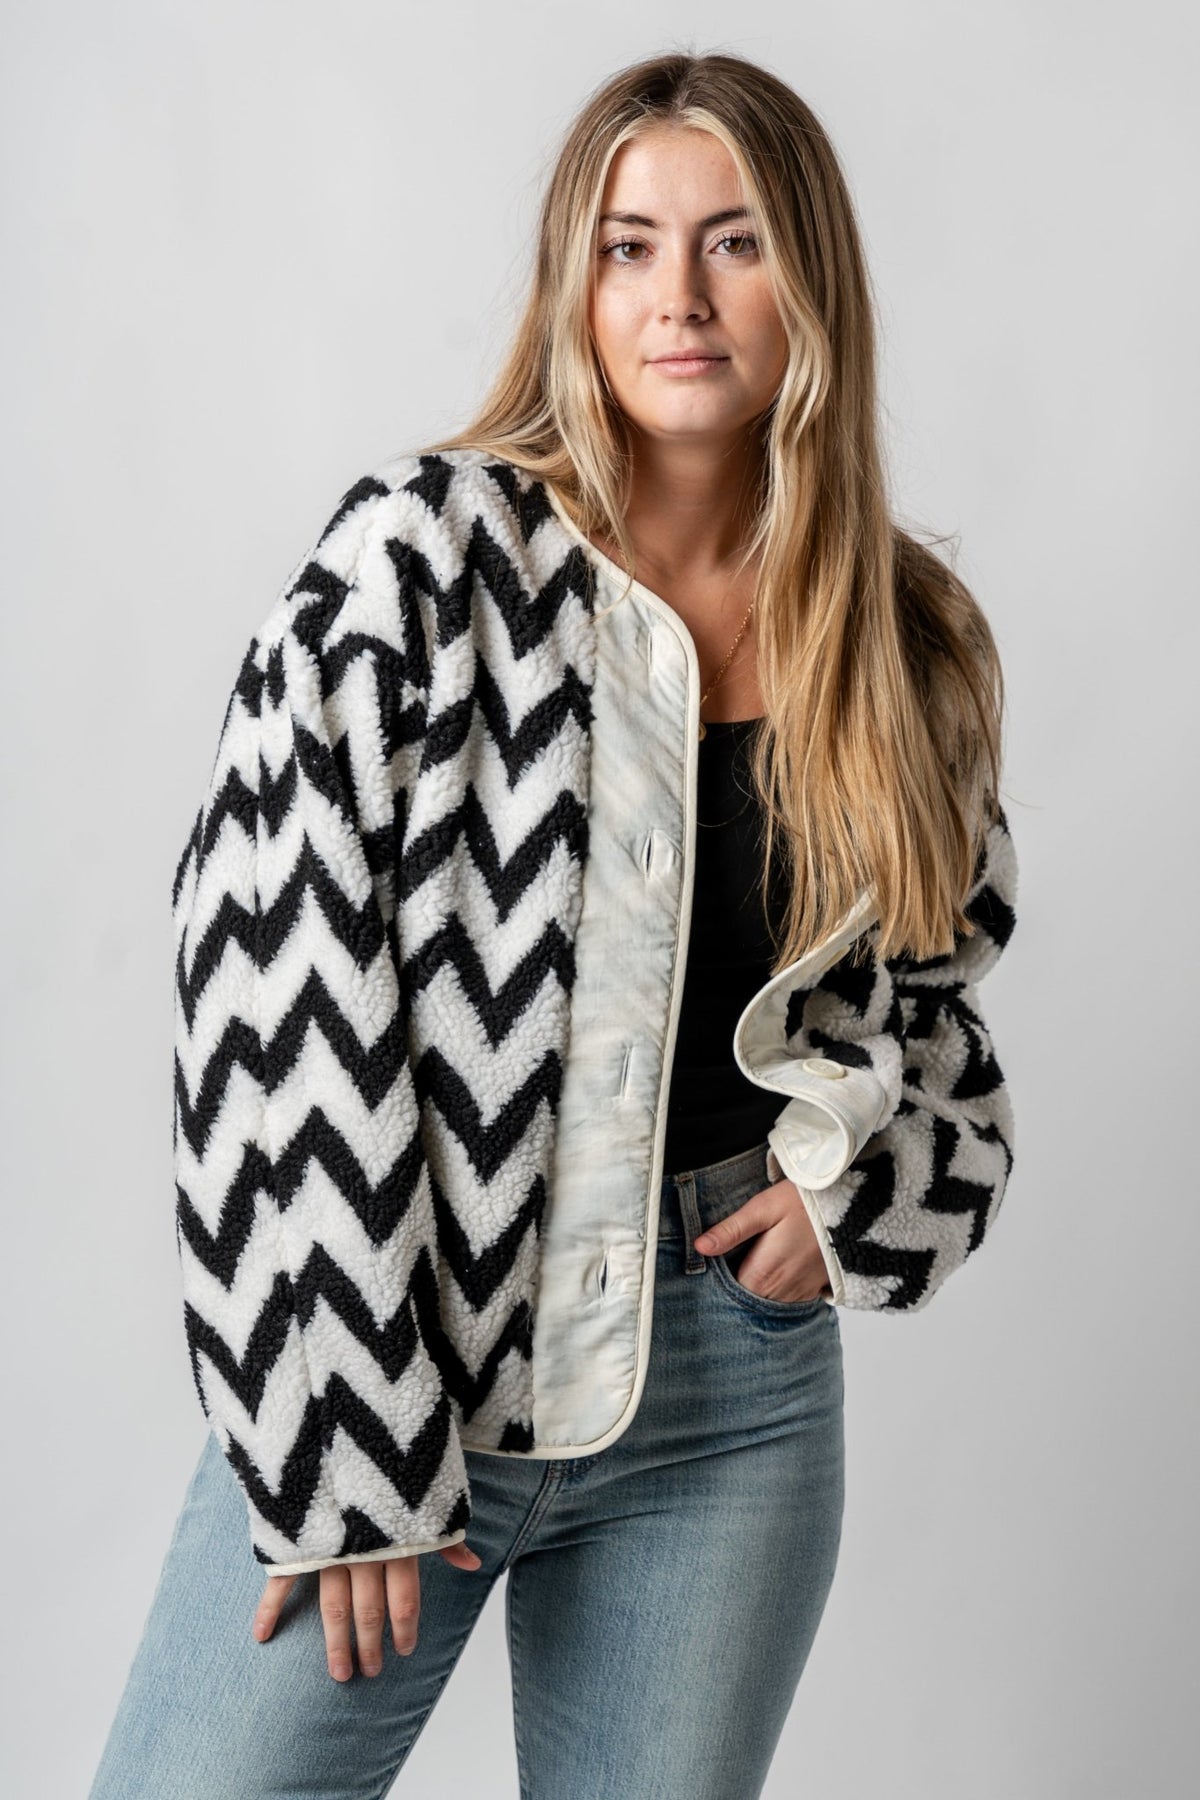 Aztec print faux fur jacket ivory/black – Trendy Jackets | Cute Fashion Blazers at Lush Fashion Lounge Boutique in Oklahoma City